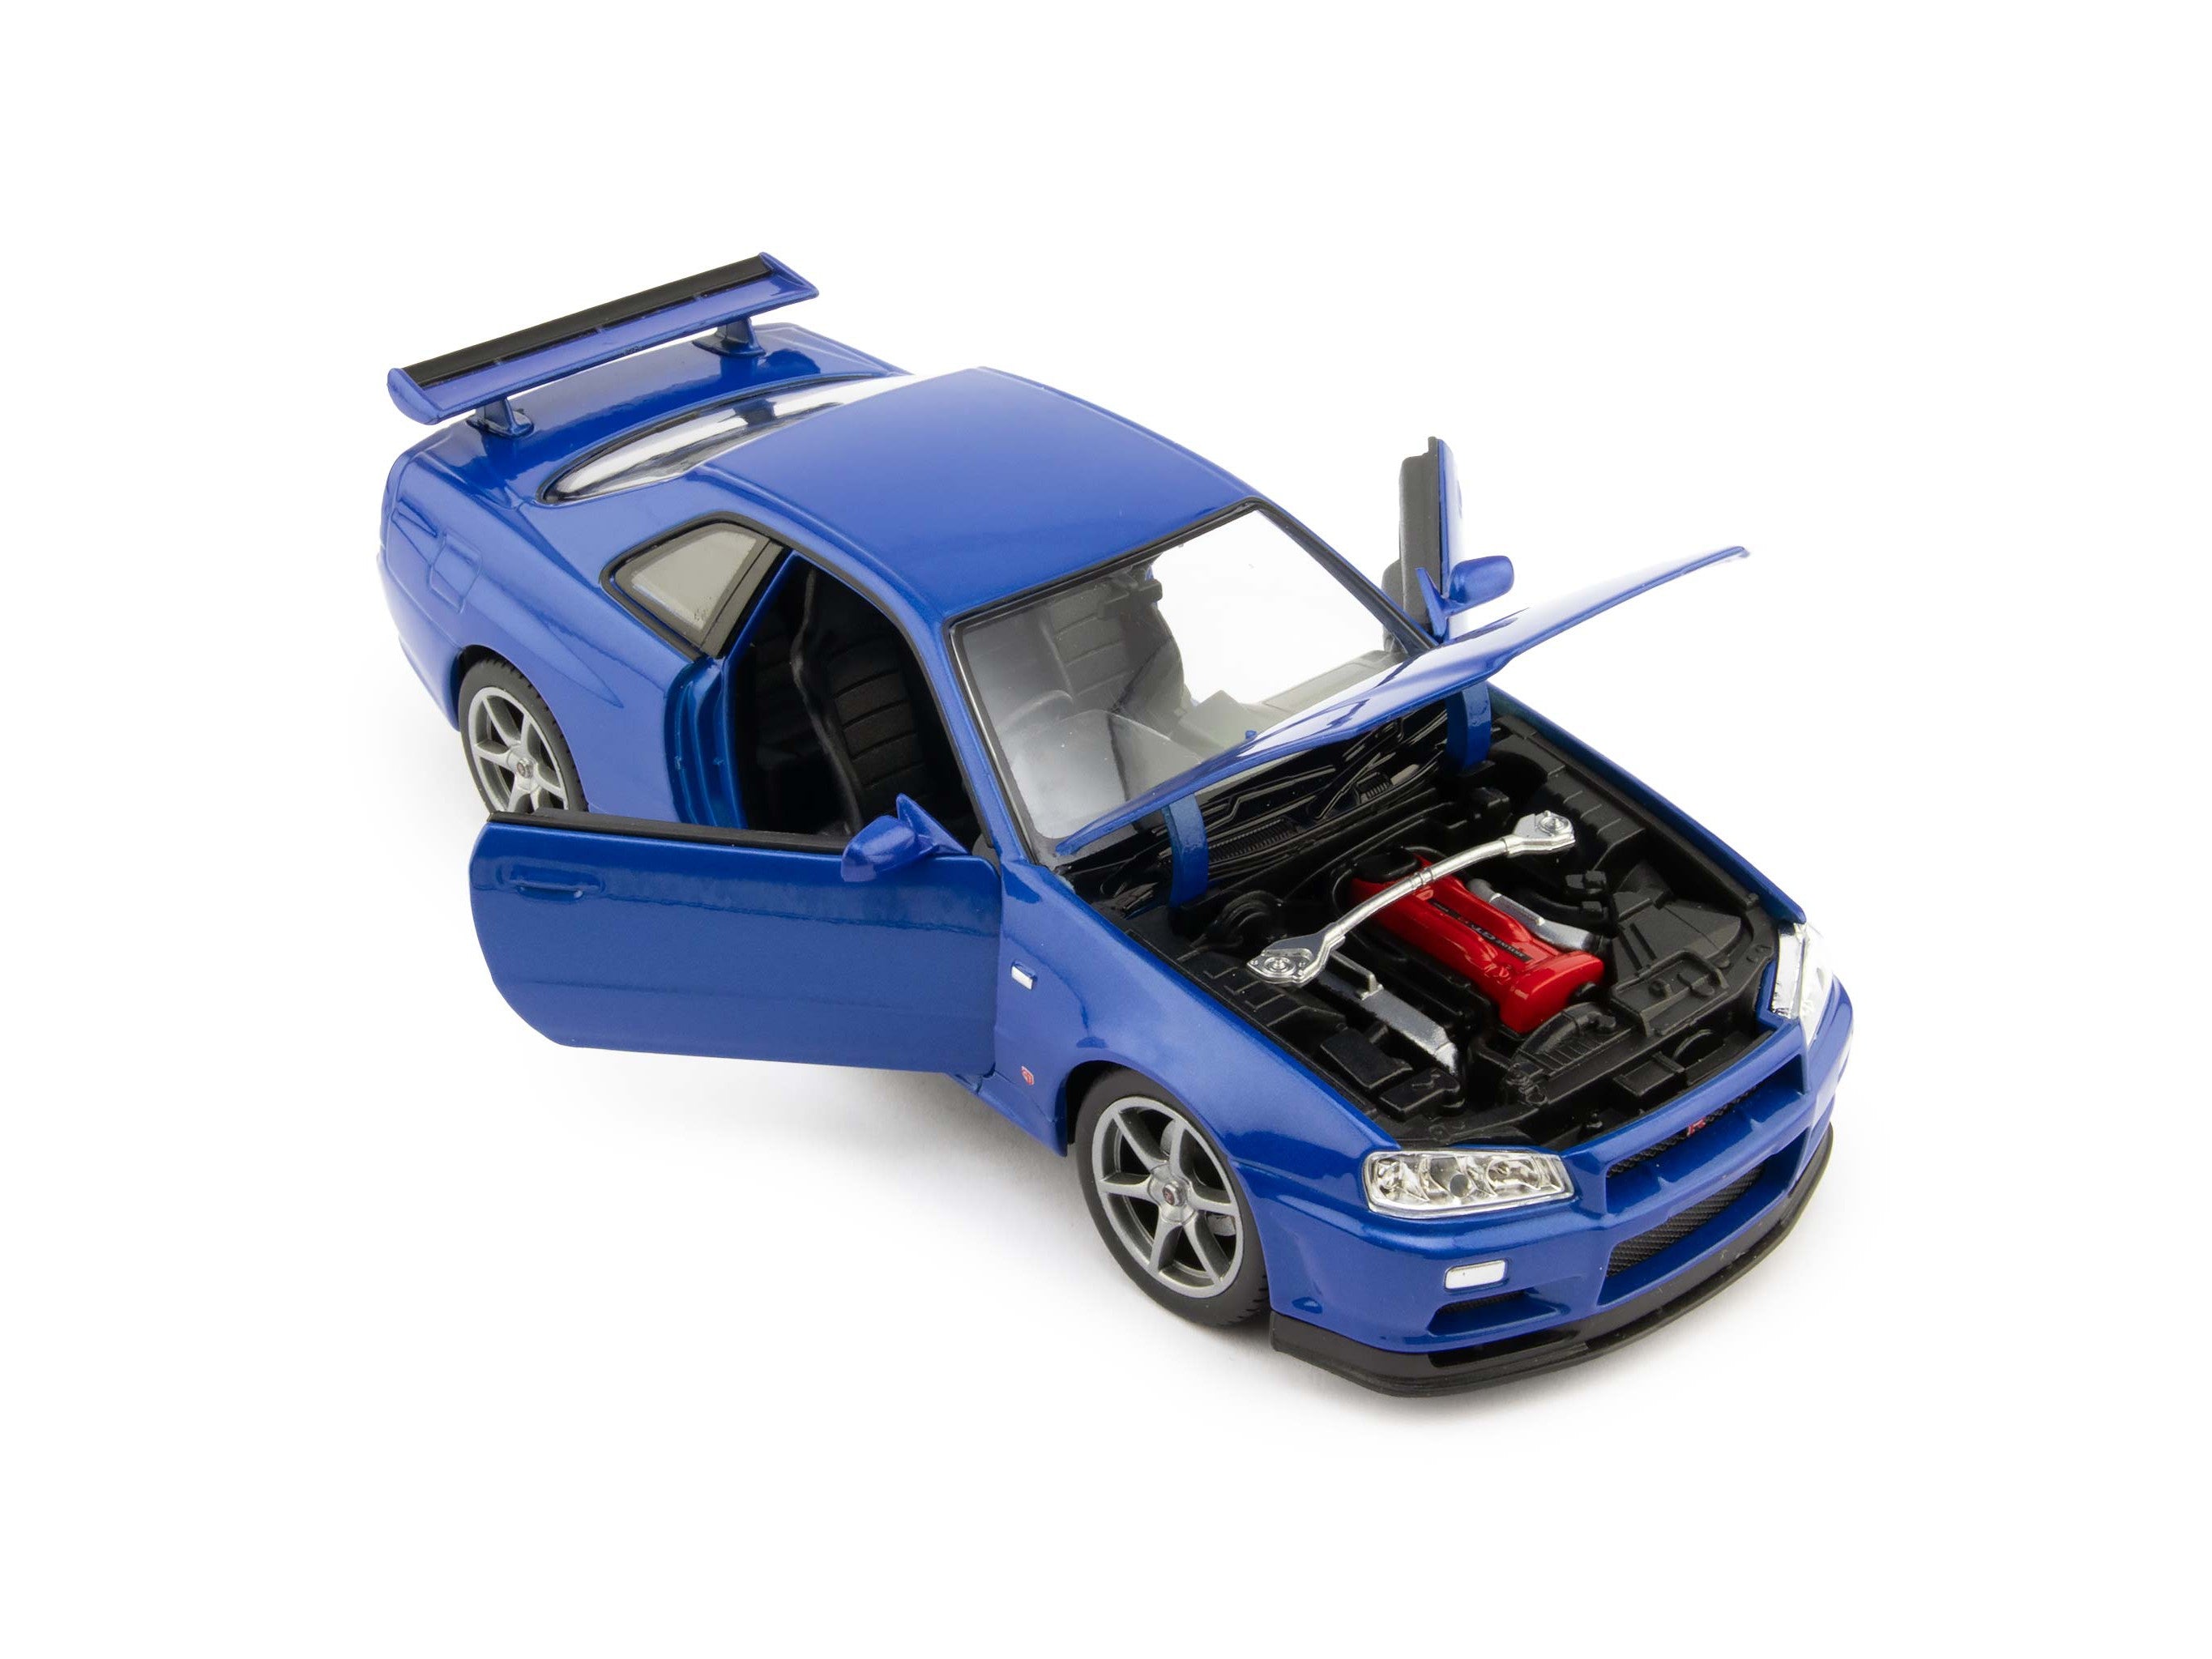 Nissan Skyline GT-R (R34) Diecast Model Car blue - 1:24 Scale